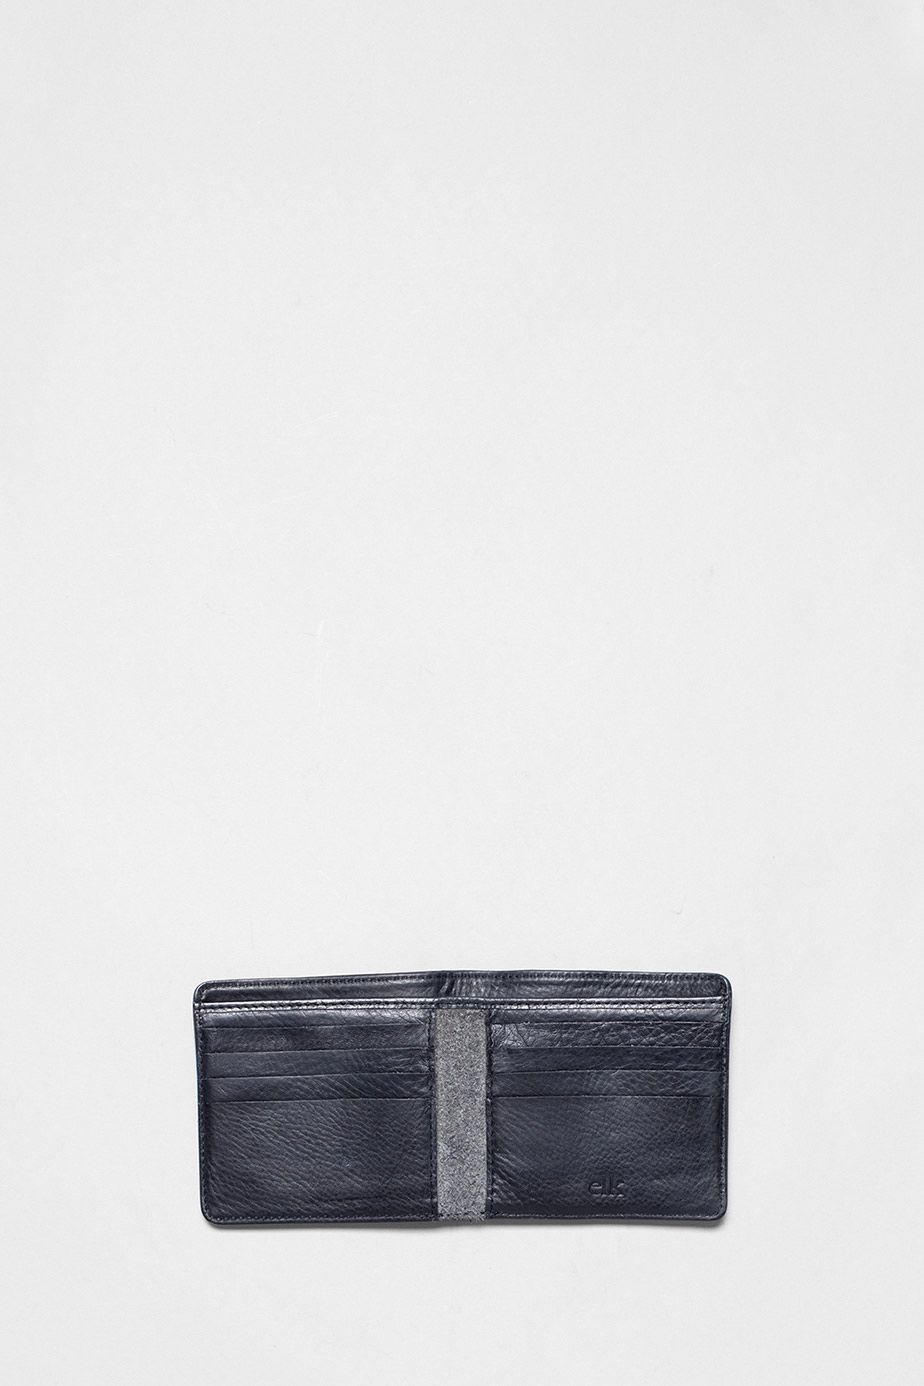 Mand Compact Flip Open Leather Wallet Internal Black 